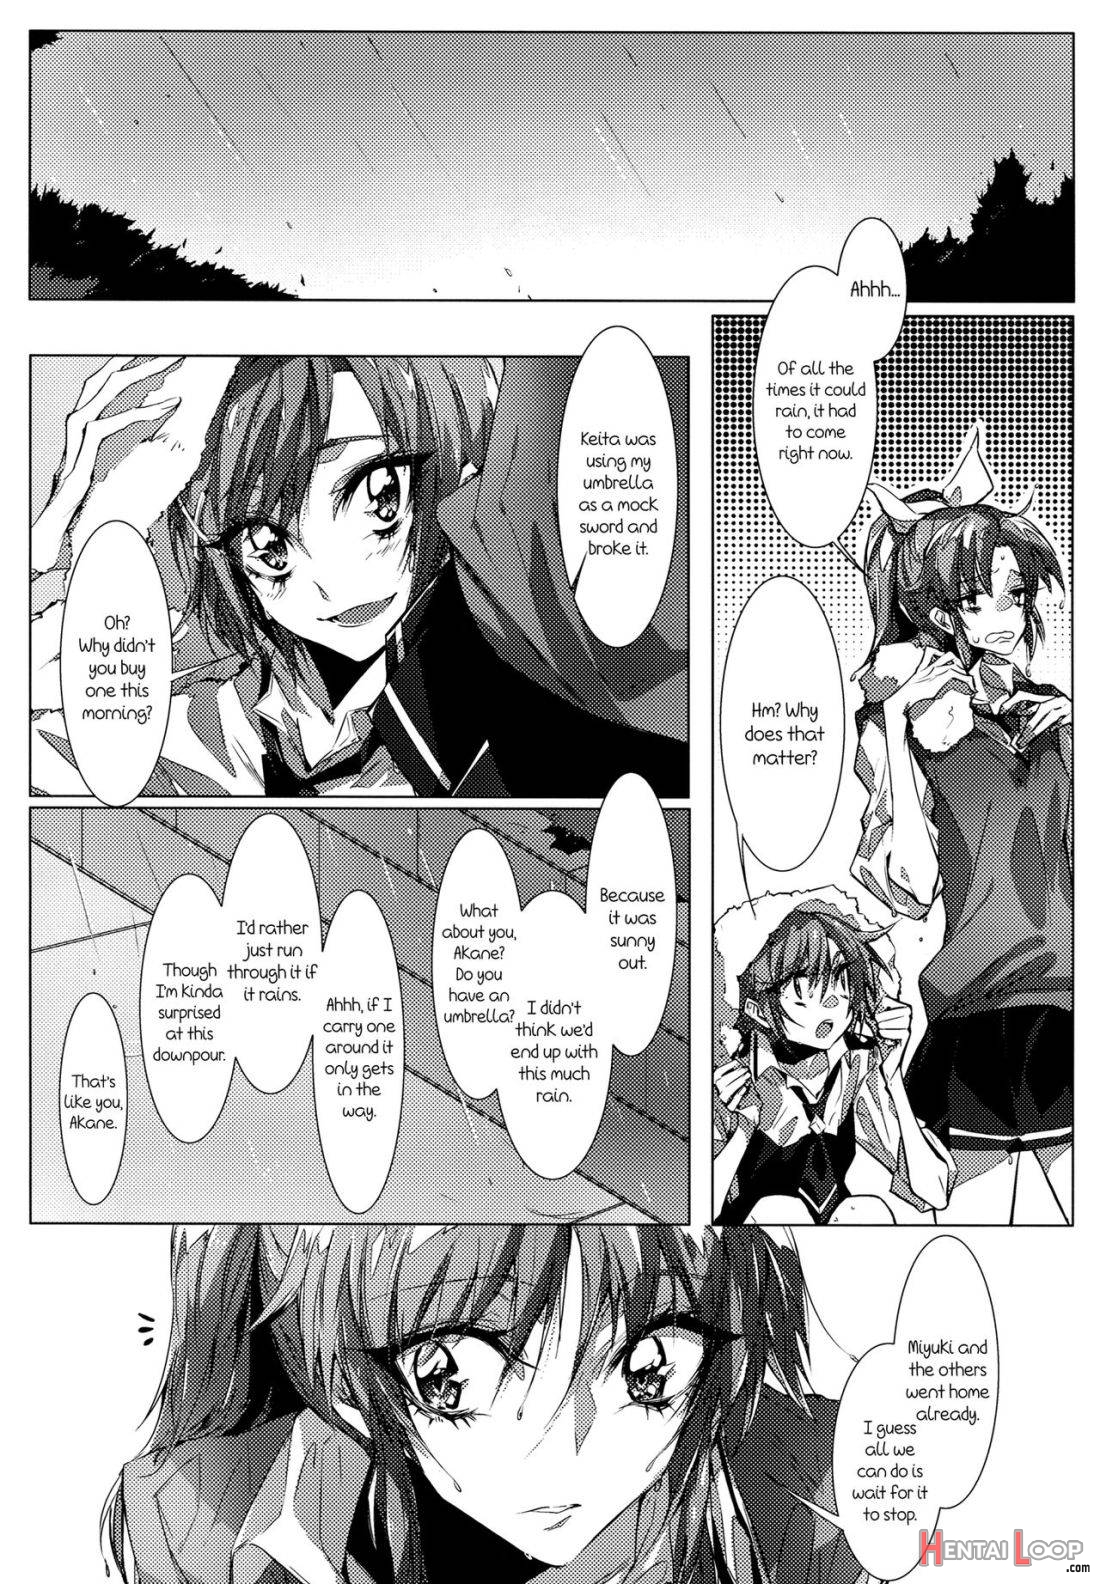 Houkago 23 page 2